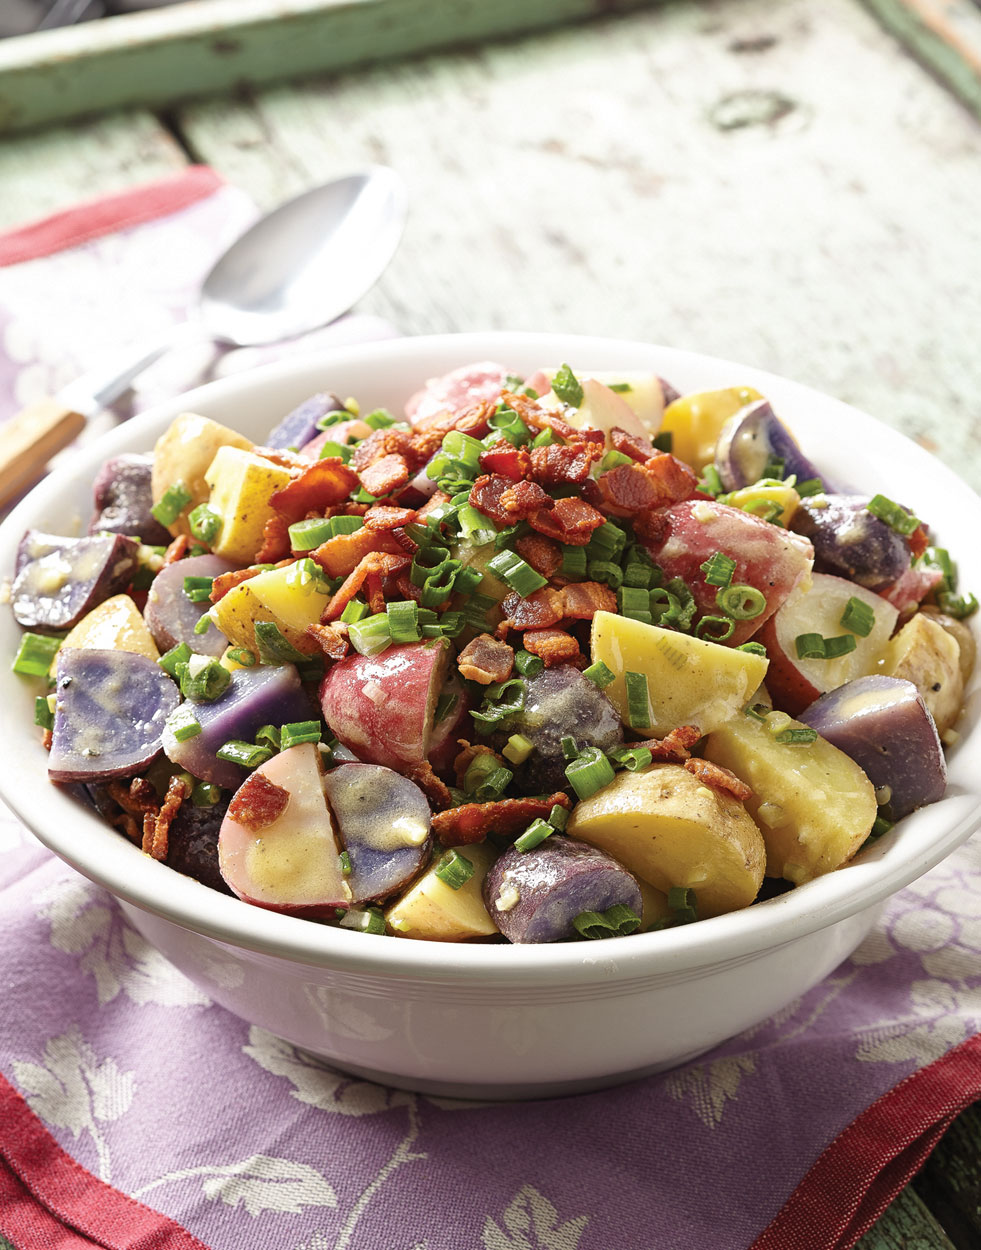 Tri-Colored Potato Salad with Dijon vinaigrette